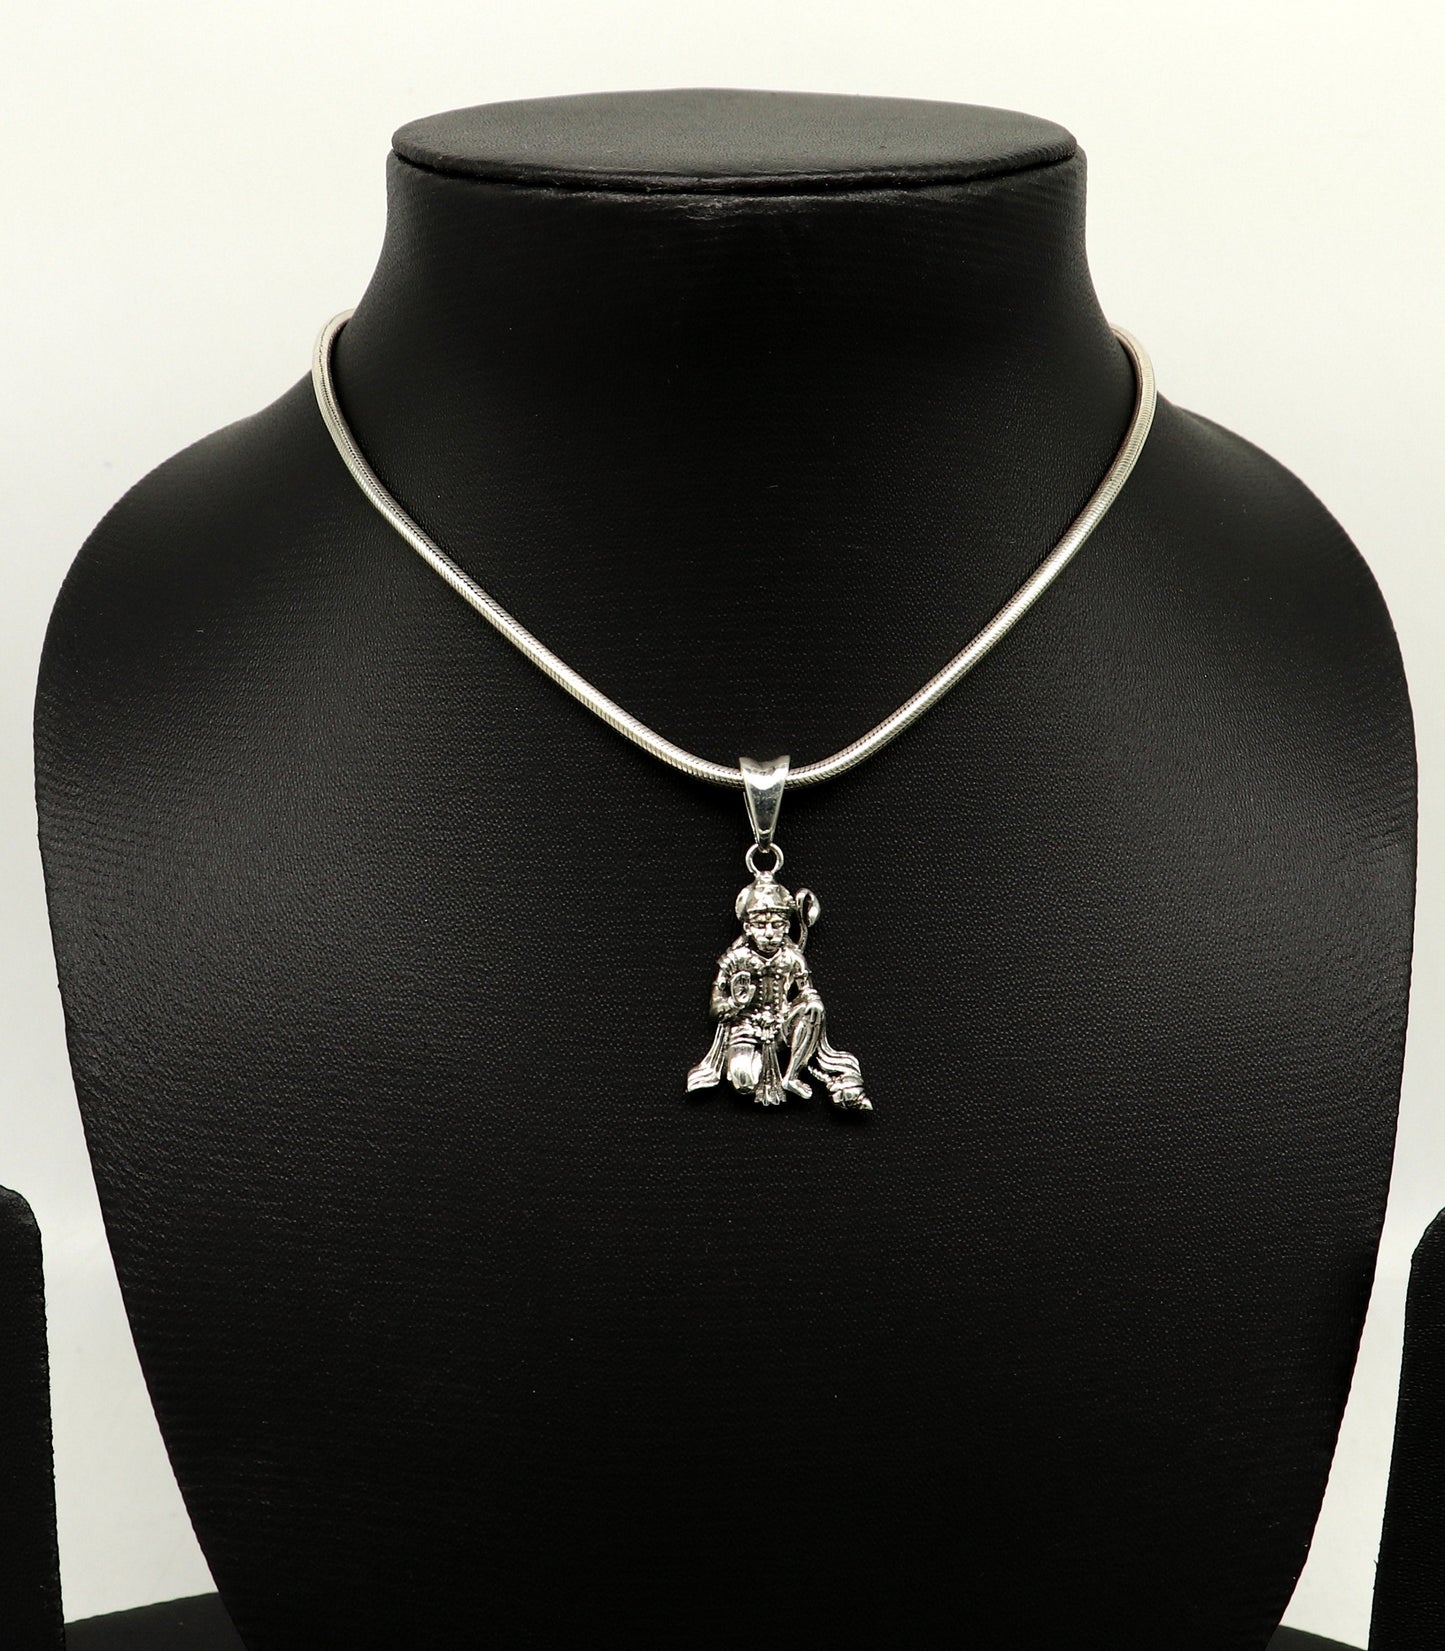 925 sterling silver handmade idol Hanuman ji pendant, amazing stylish unisex pendant locket personalized jewelry tribal jewelry ssp439 - TRIBAL ORNAMENTS